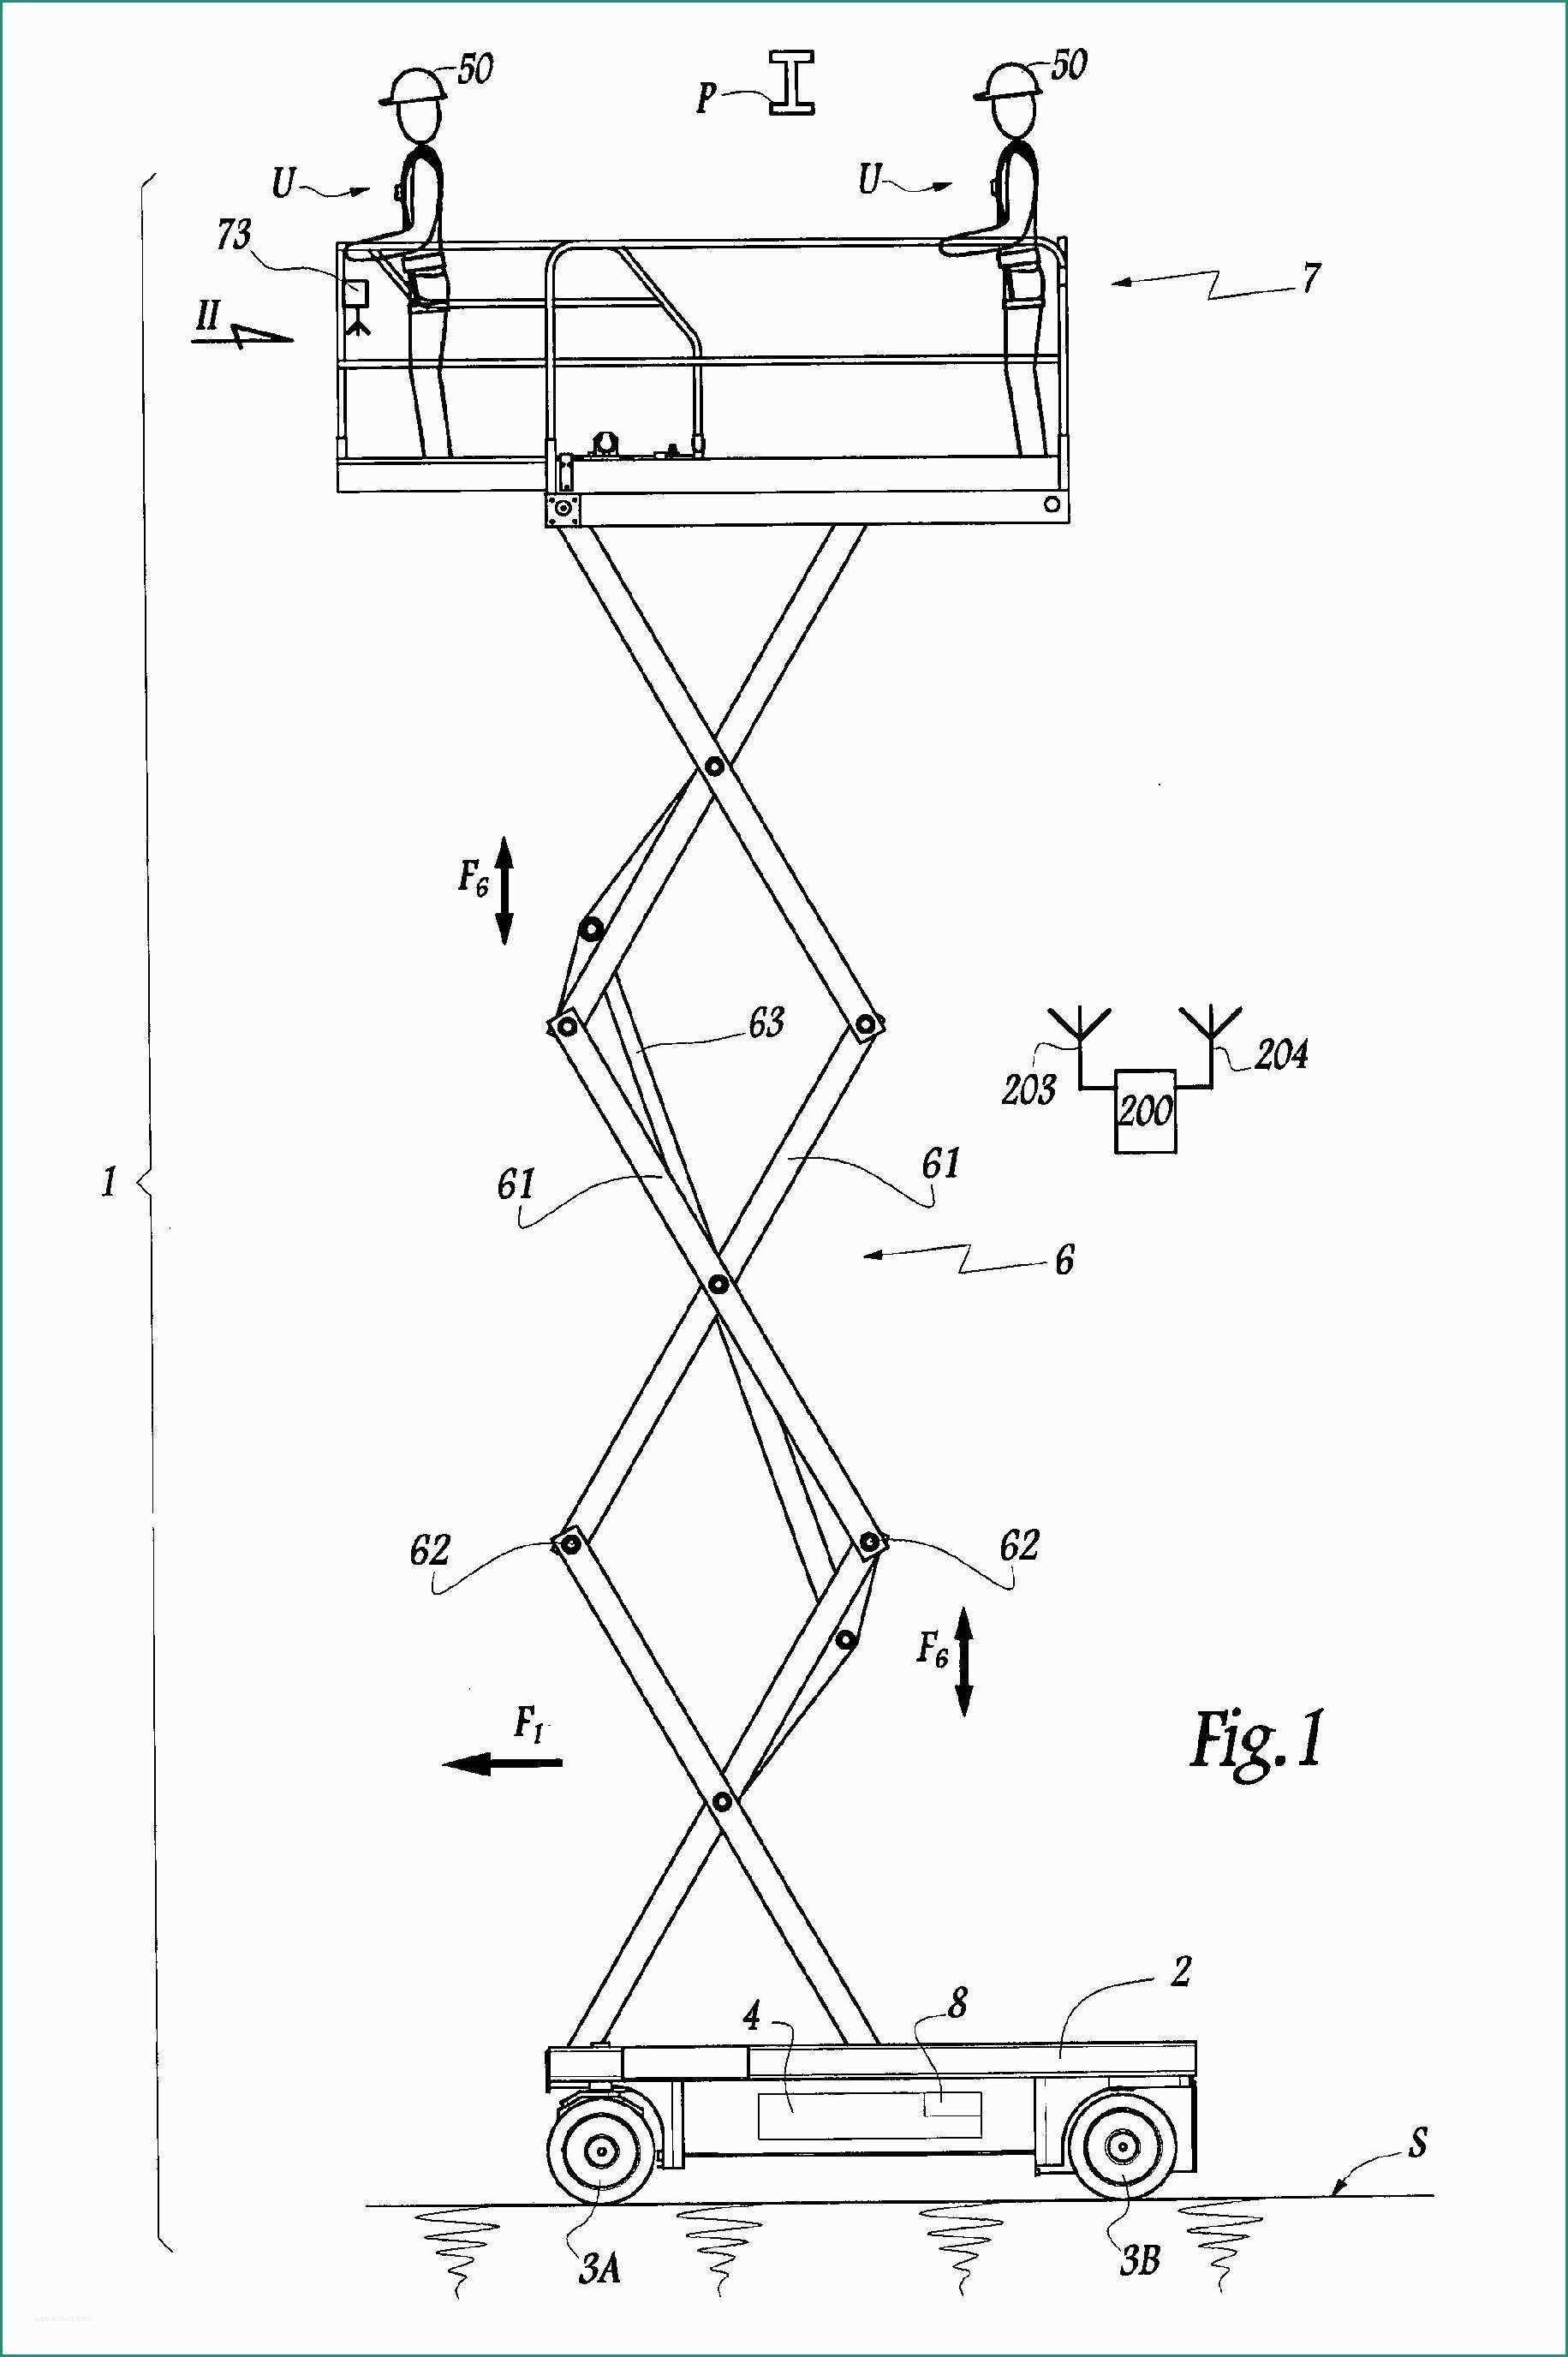 Piattaforma Elevatrice Dwg E Patent Ep B1 Dispositif De Protection D Un